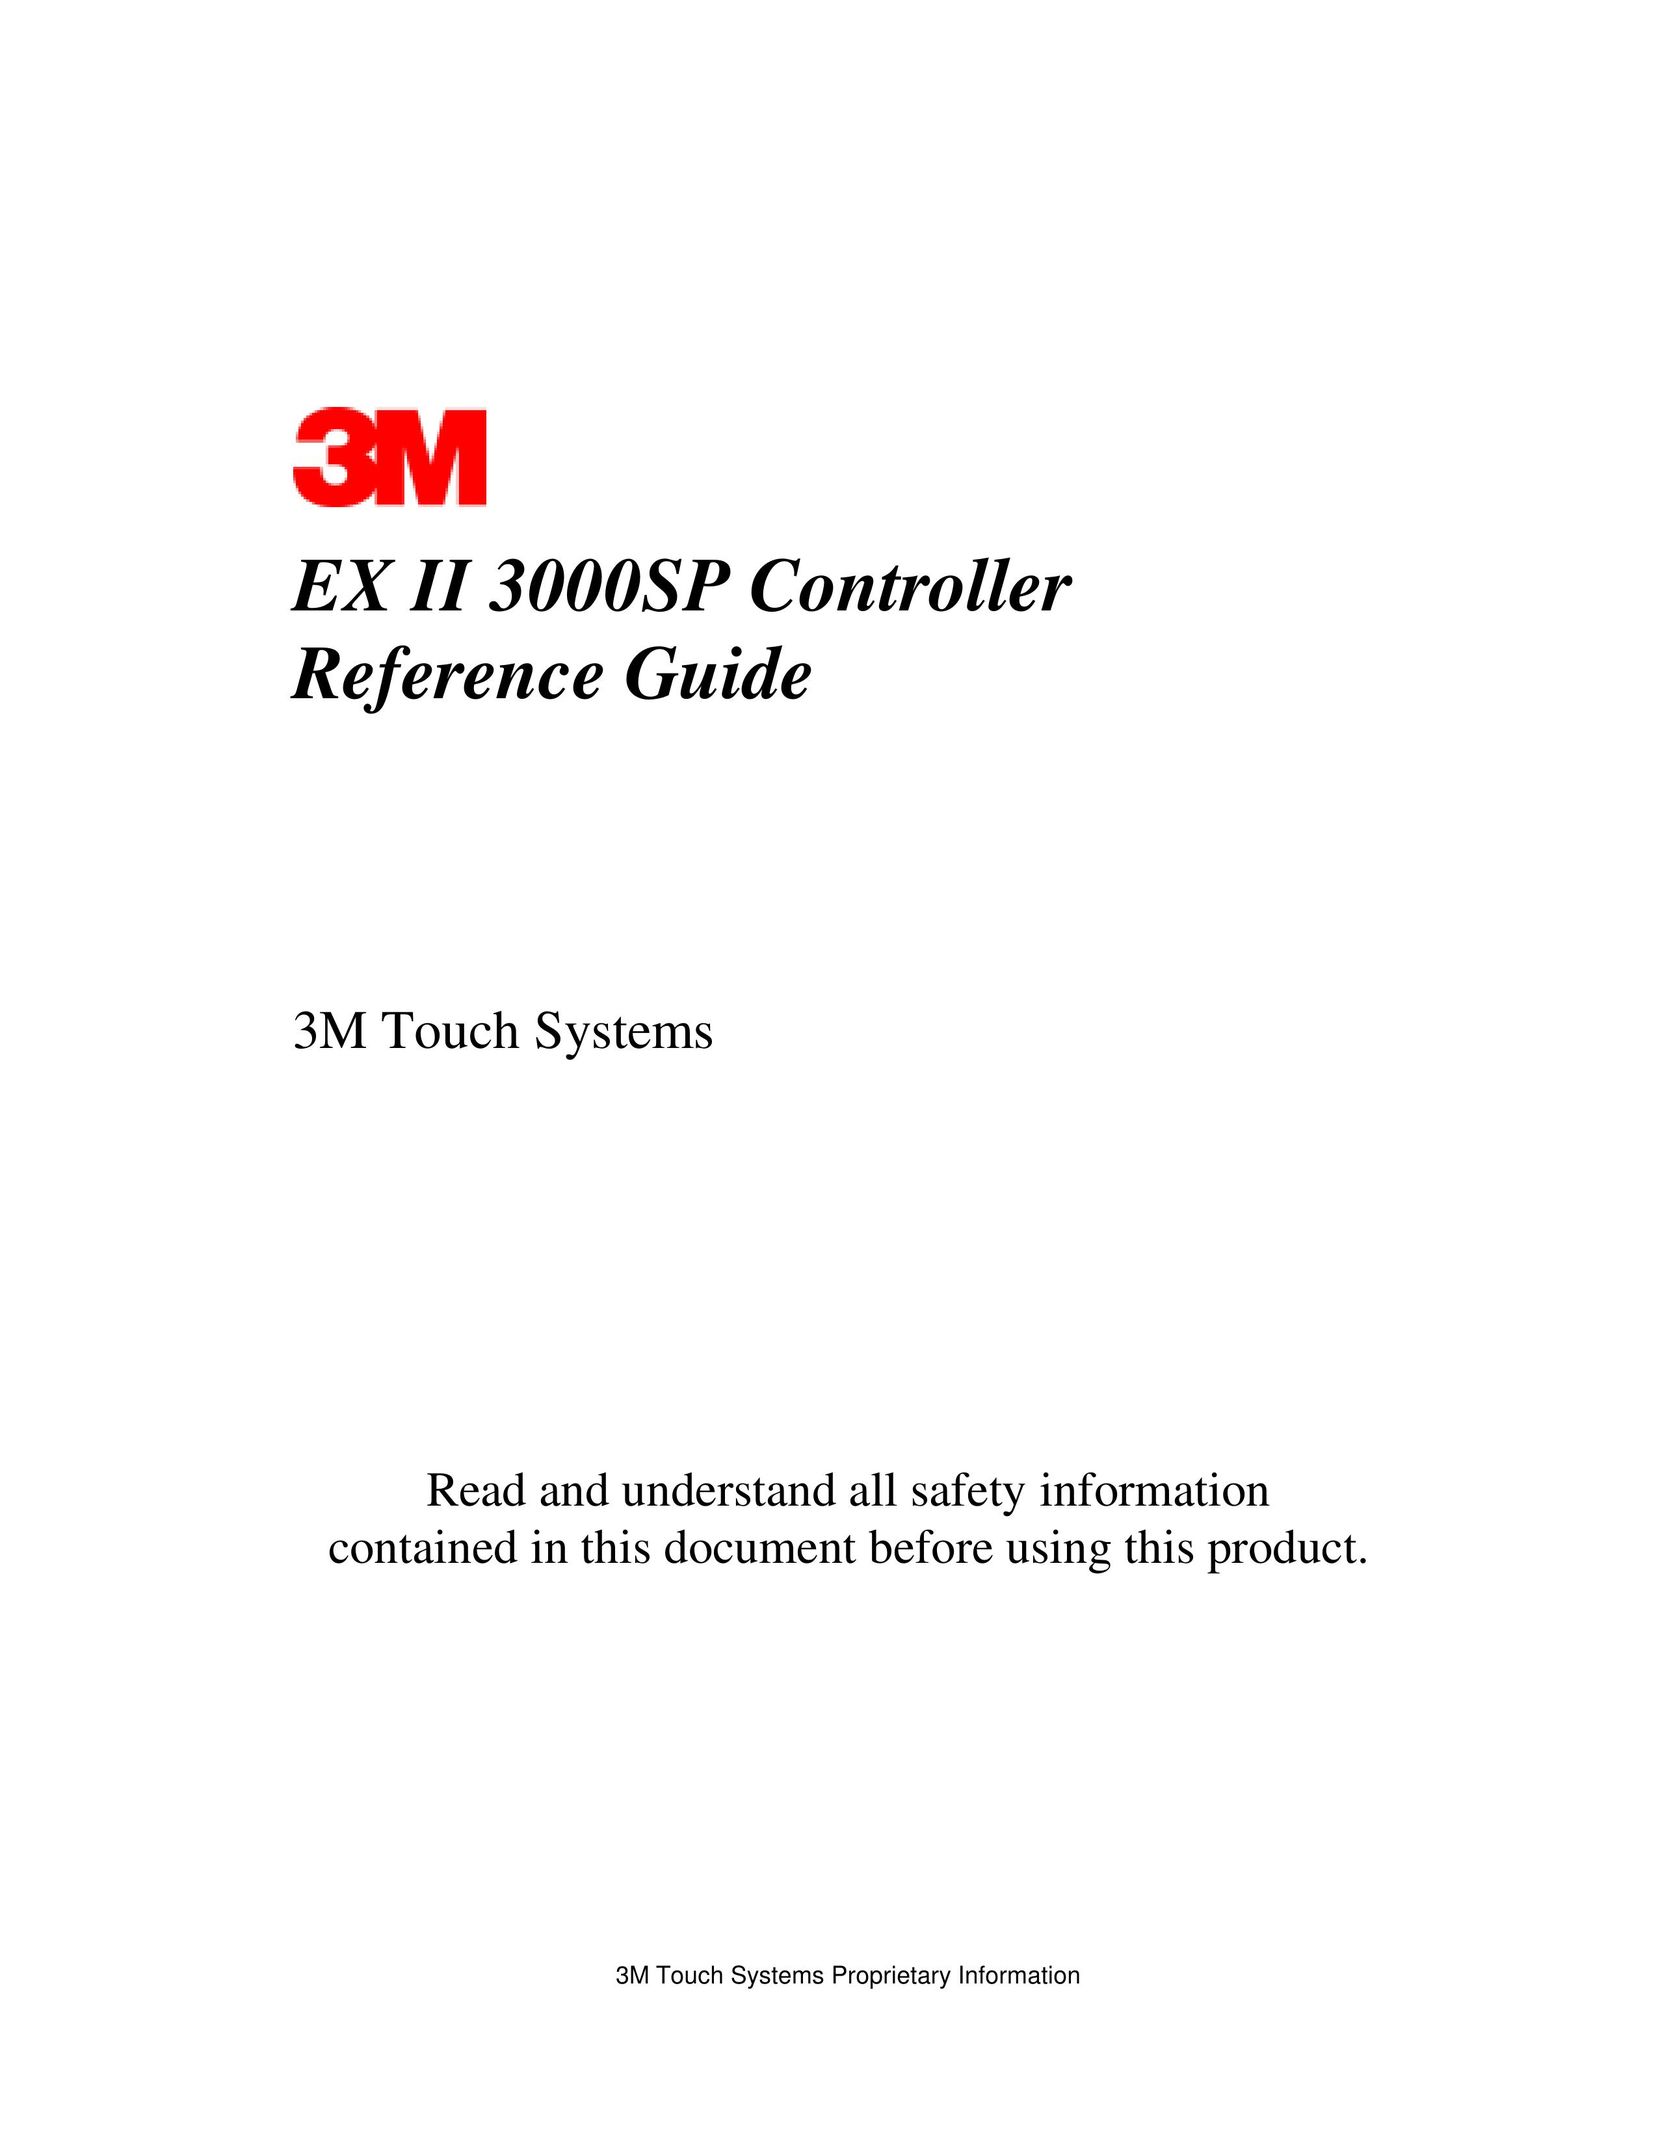 3M EX II 3000SP Computer Monitor User Manual